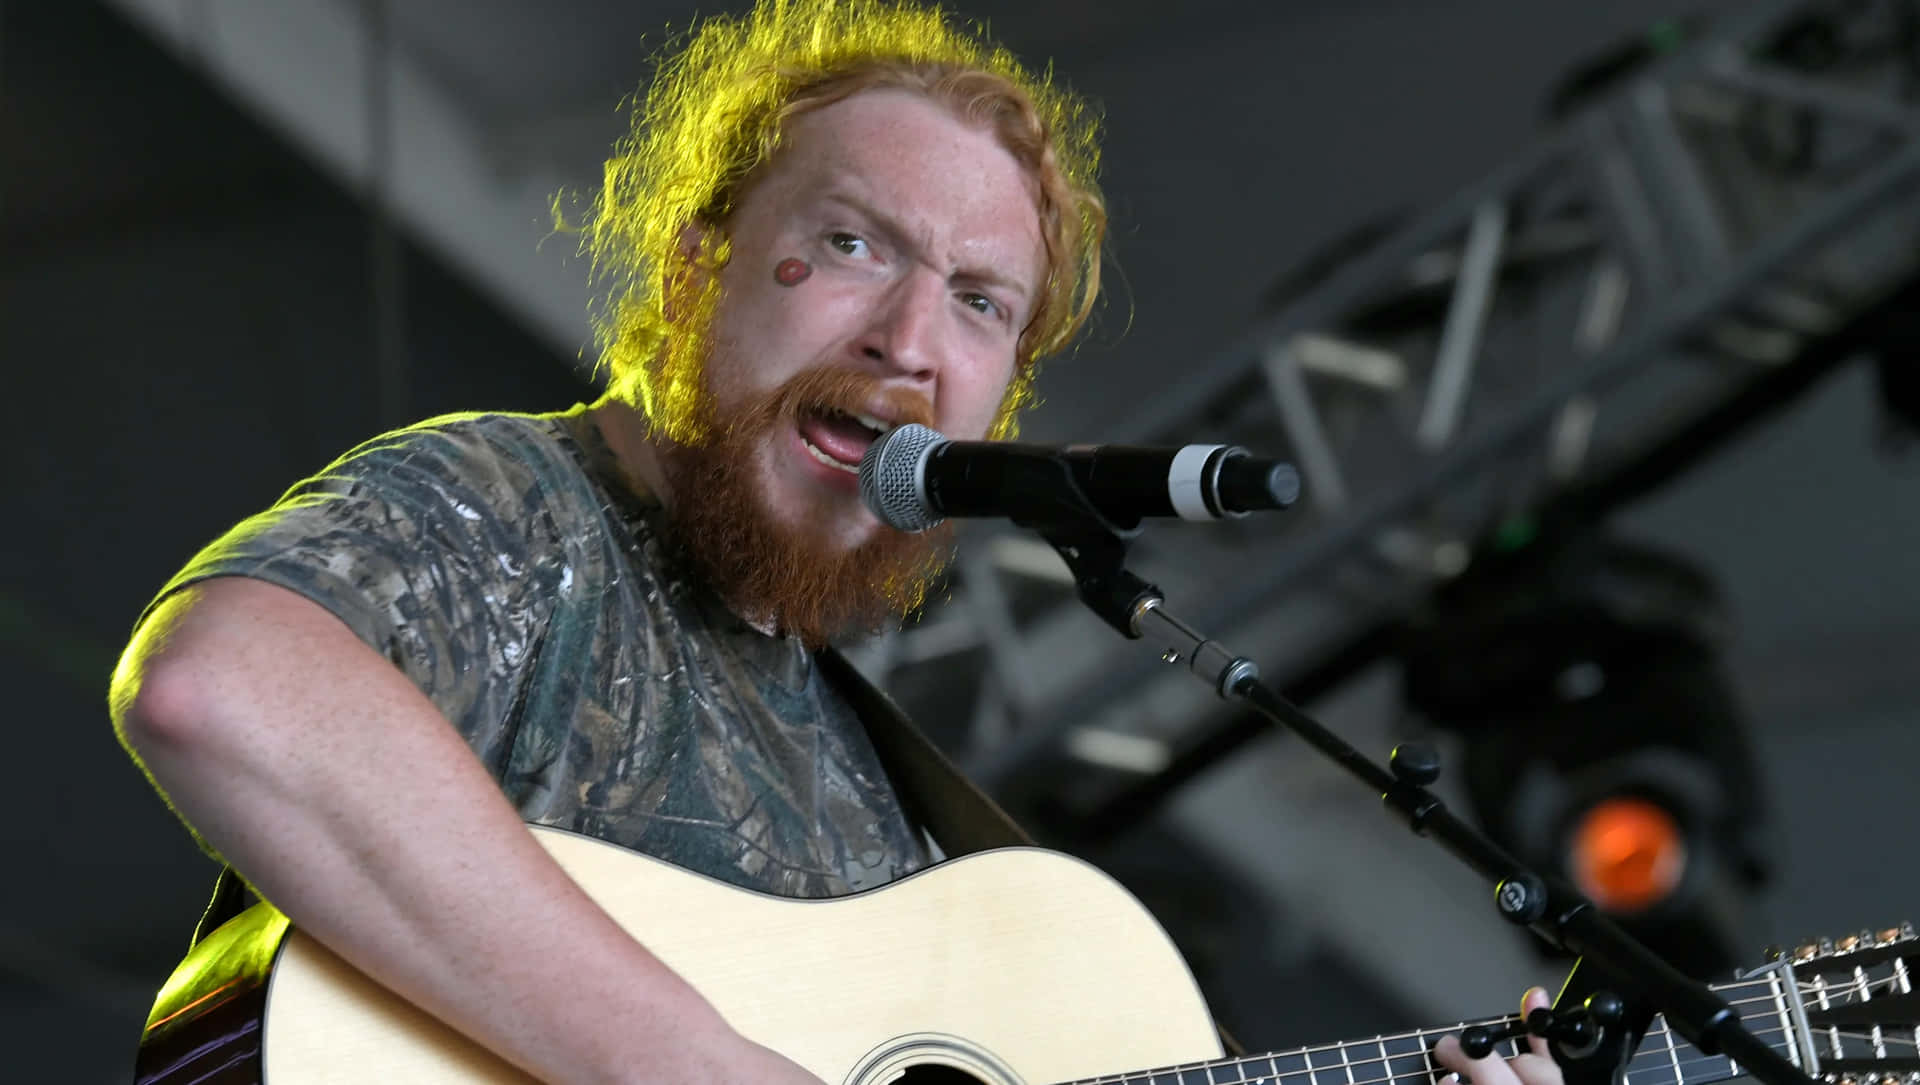 Ginger Bearded Musician Performing Live Wallpaper